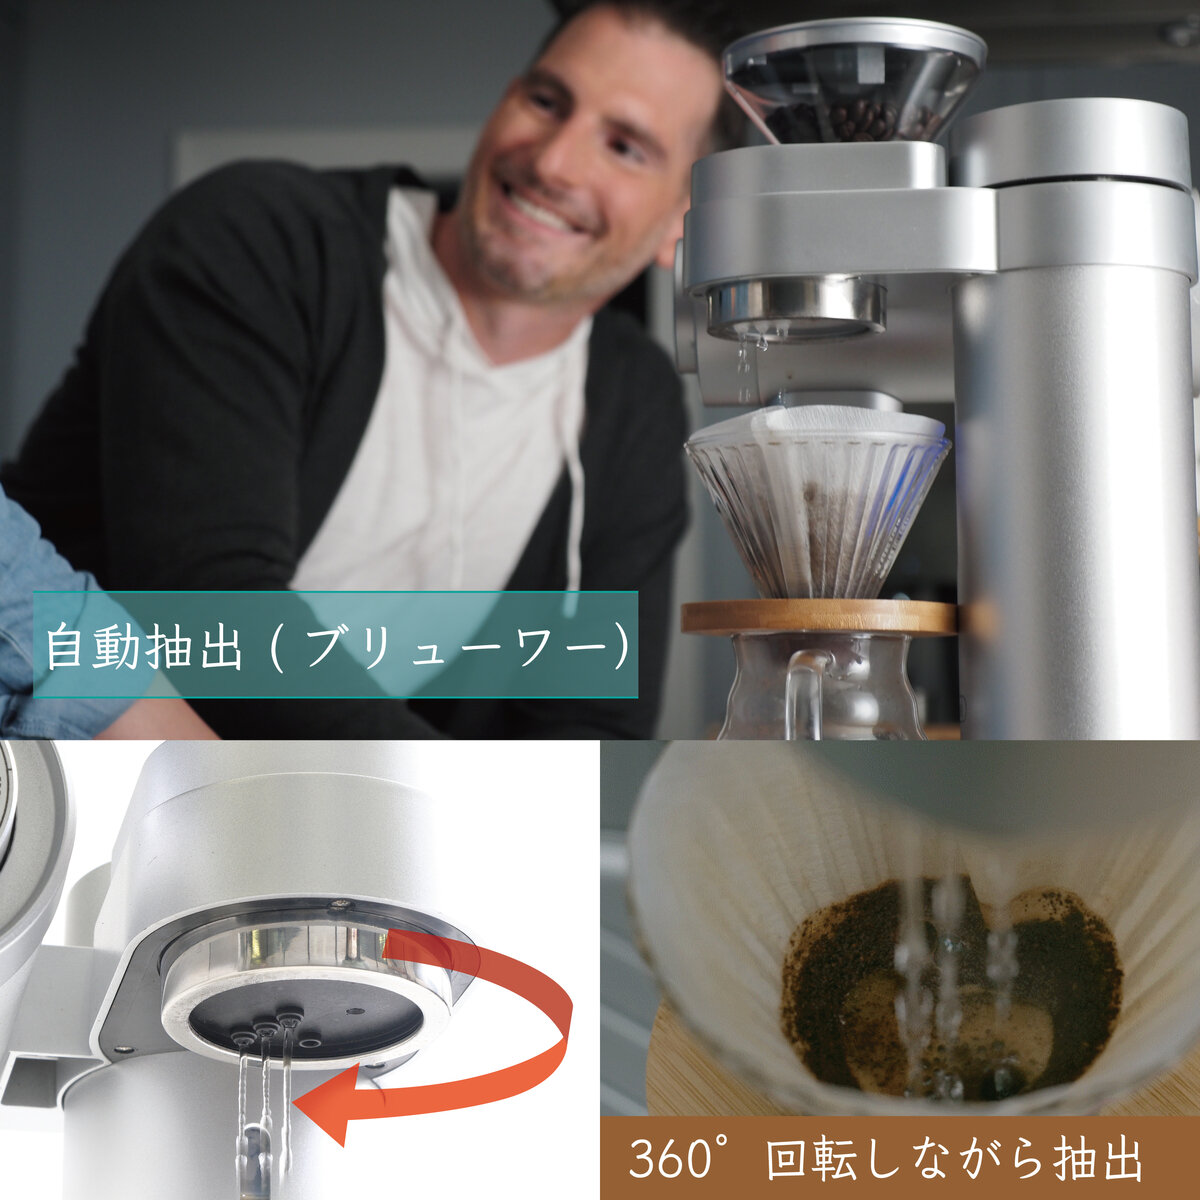 GEVI 1台4役 スマート コーヒーメーカー | Costco Japan